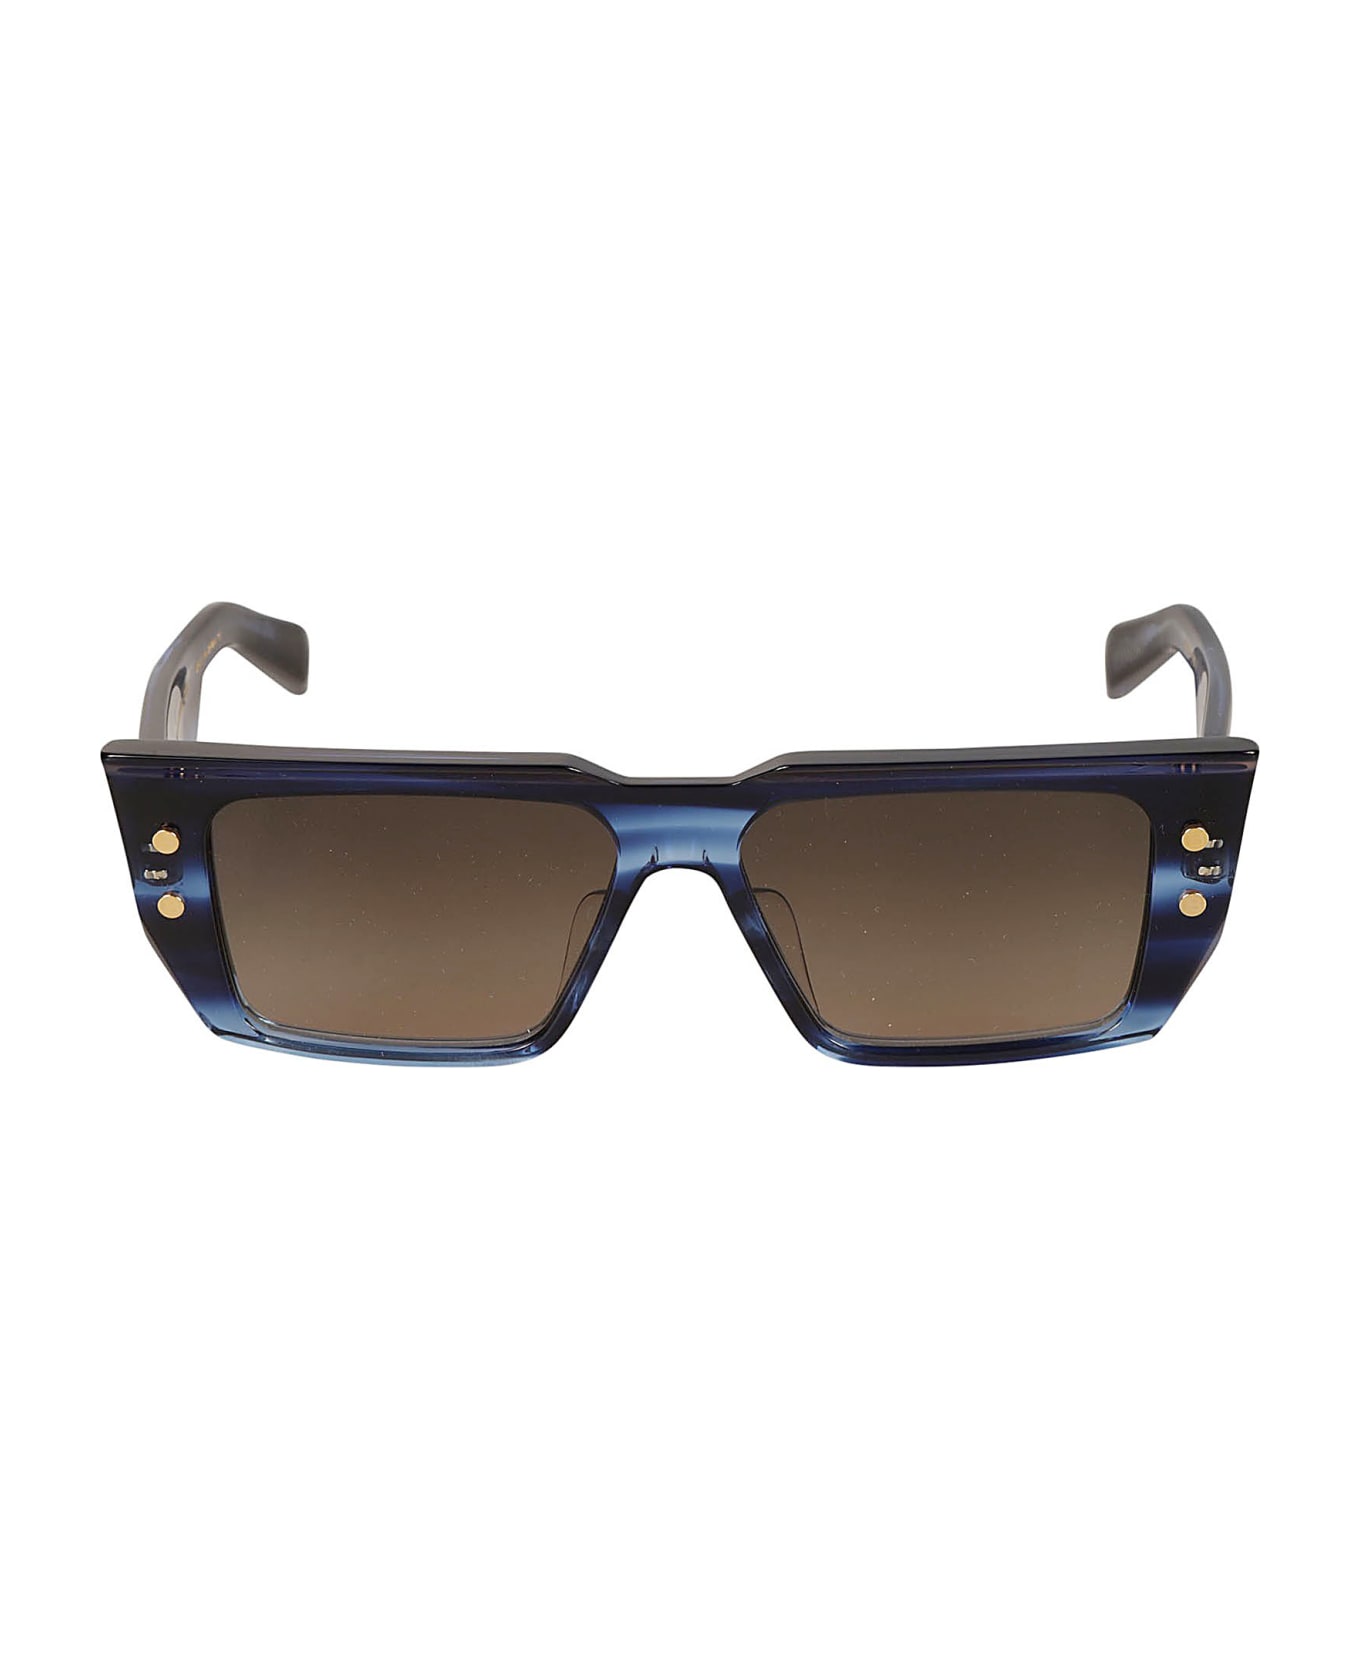 Balmain B-vi Sunglasses Sunglasses - Blue/Gold